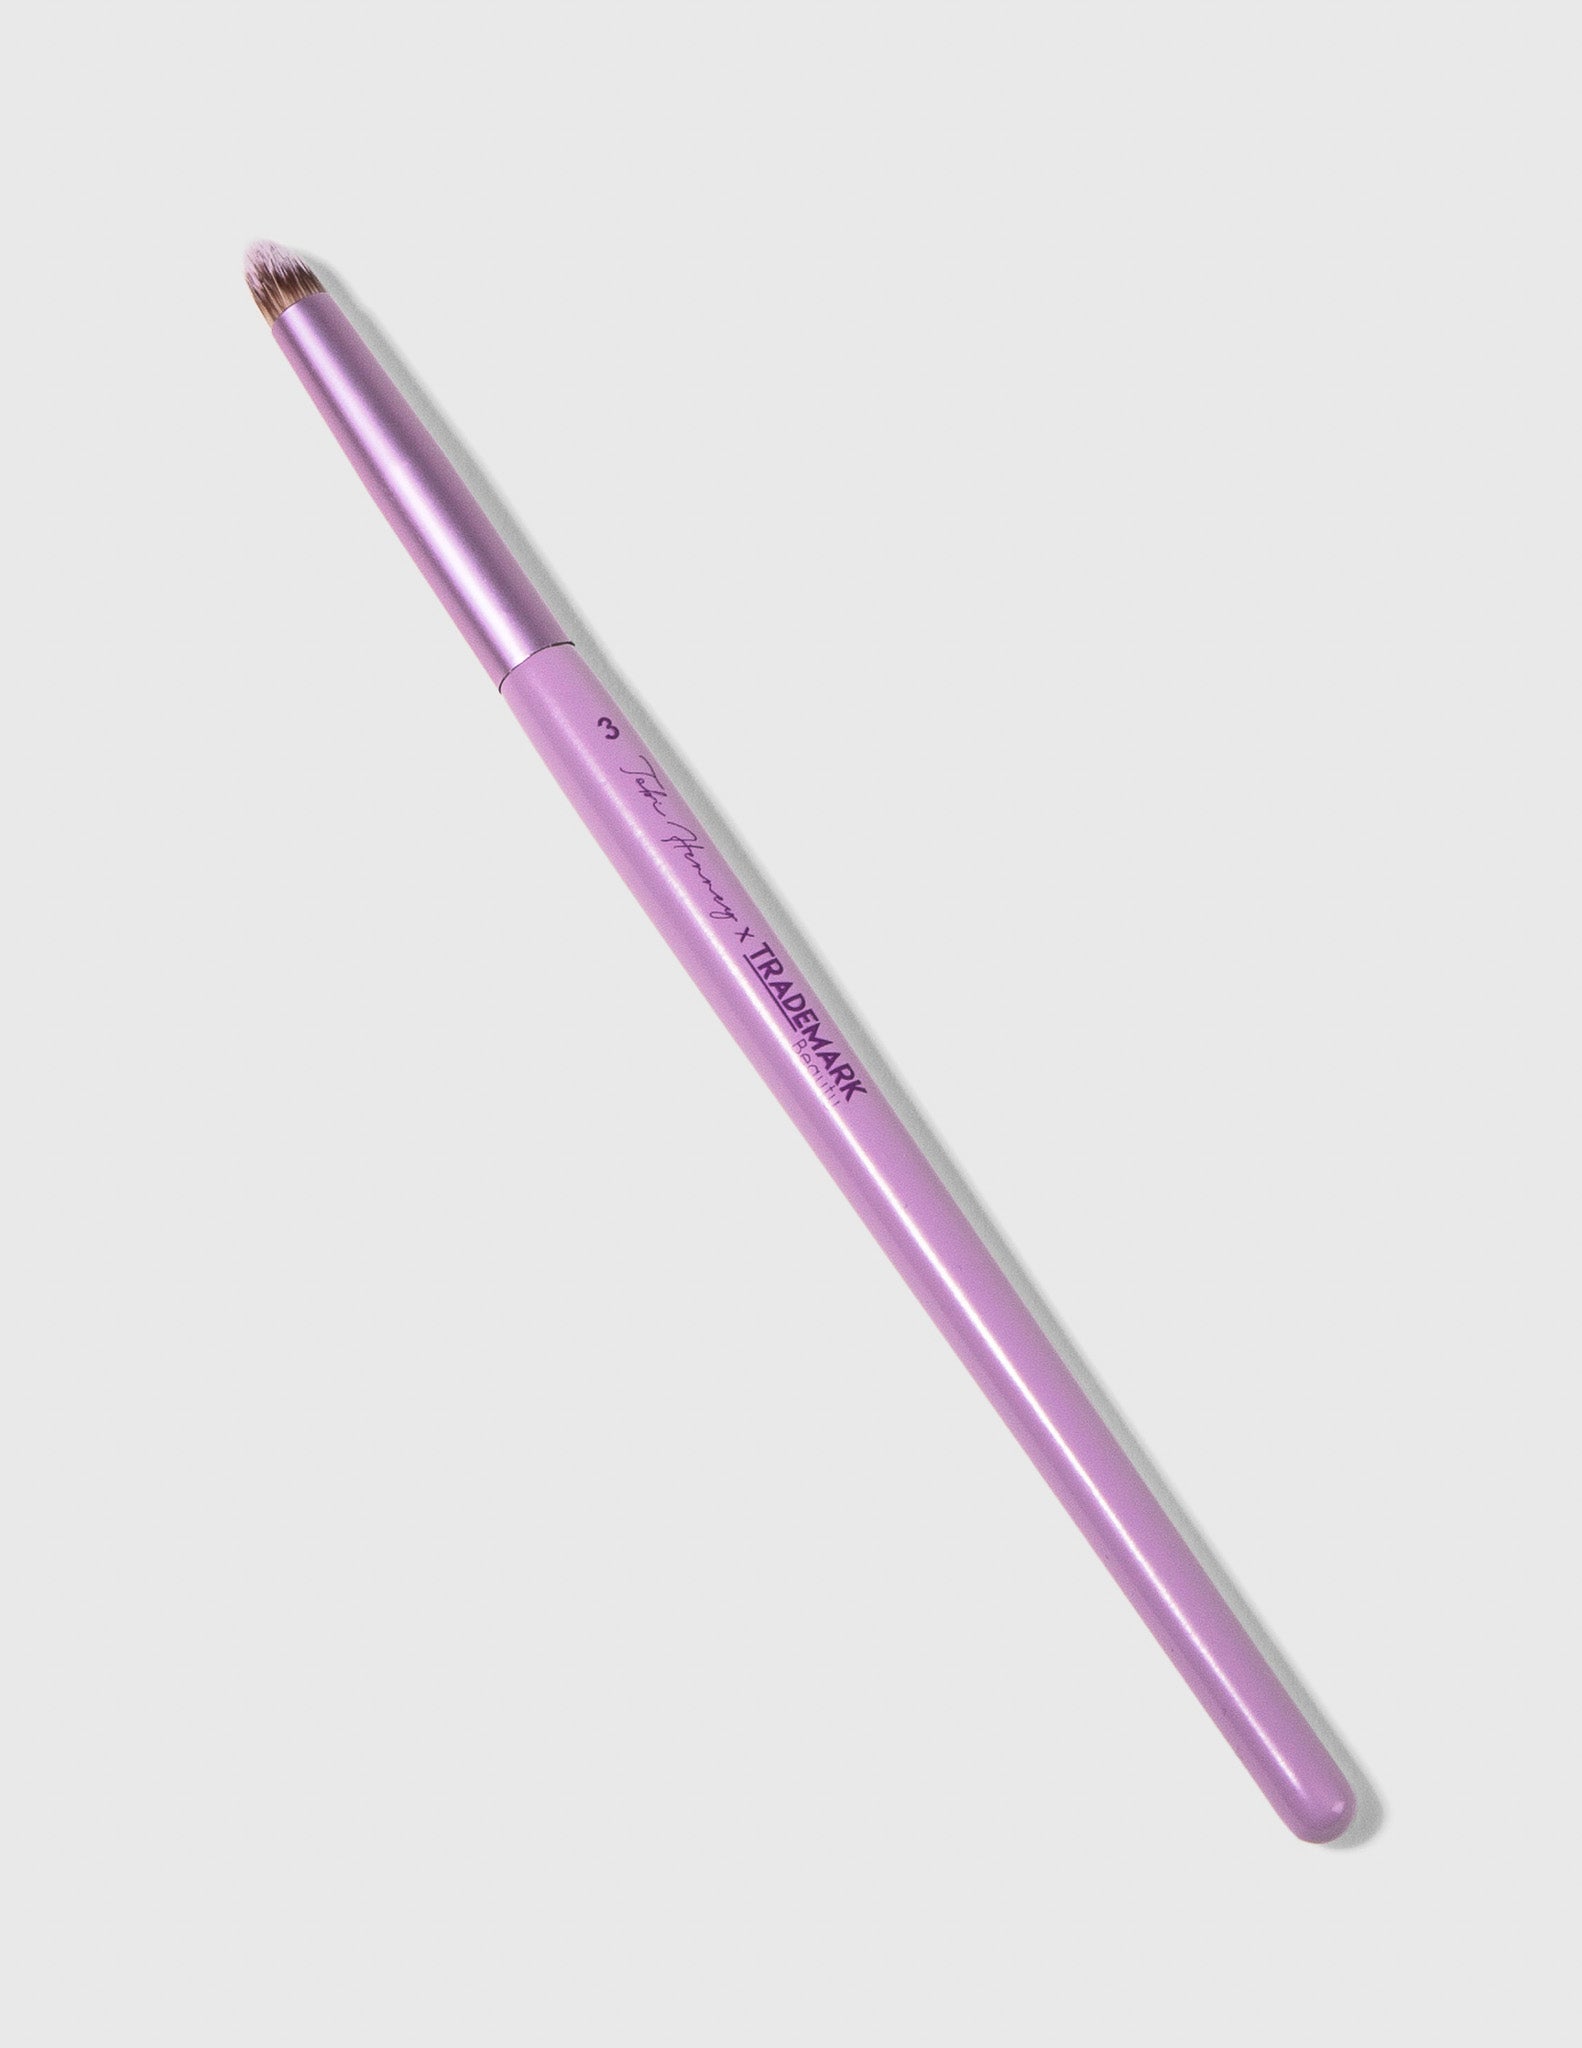 Pencil Makeup Brush - #3 - Trademark Beauty